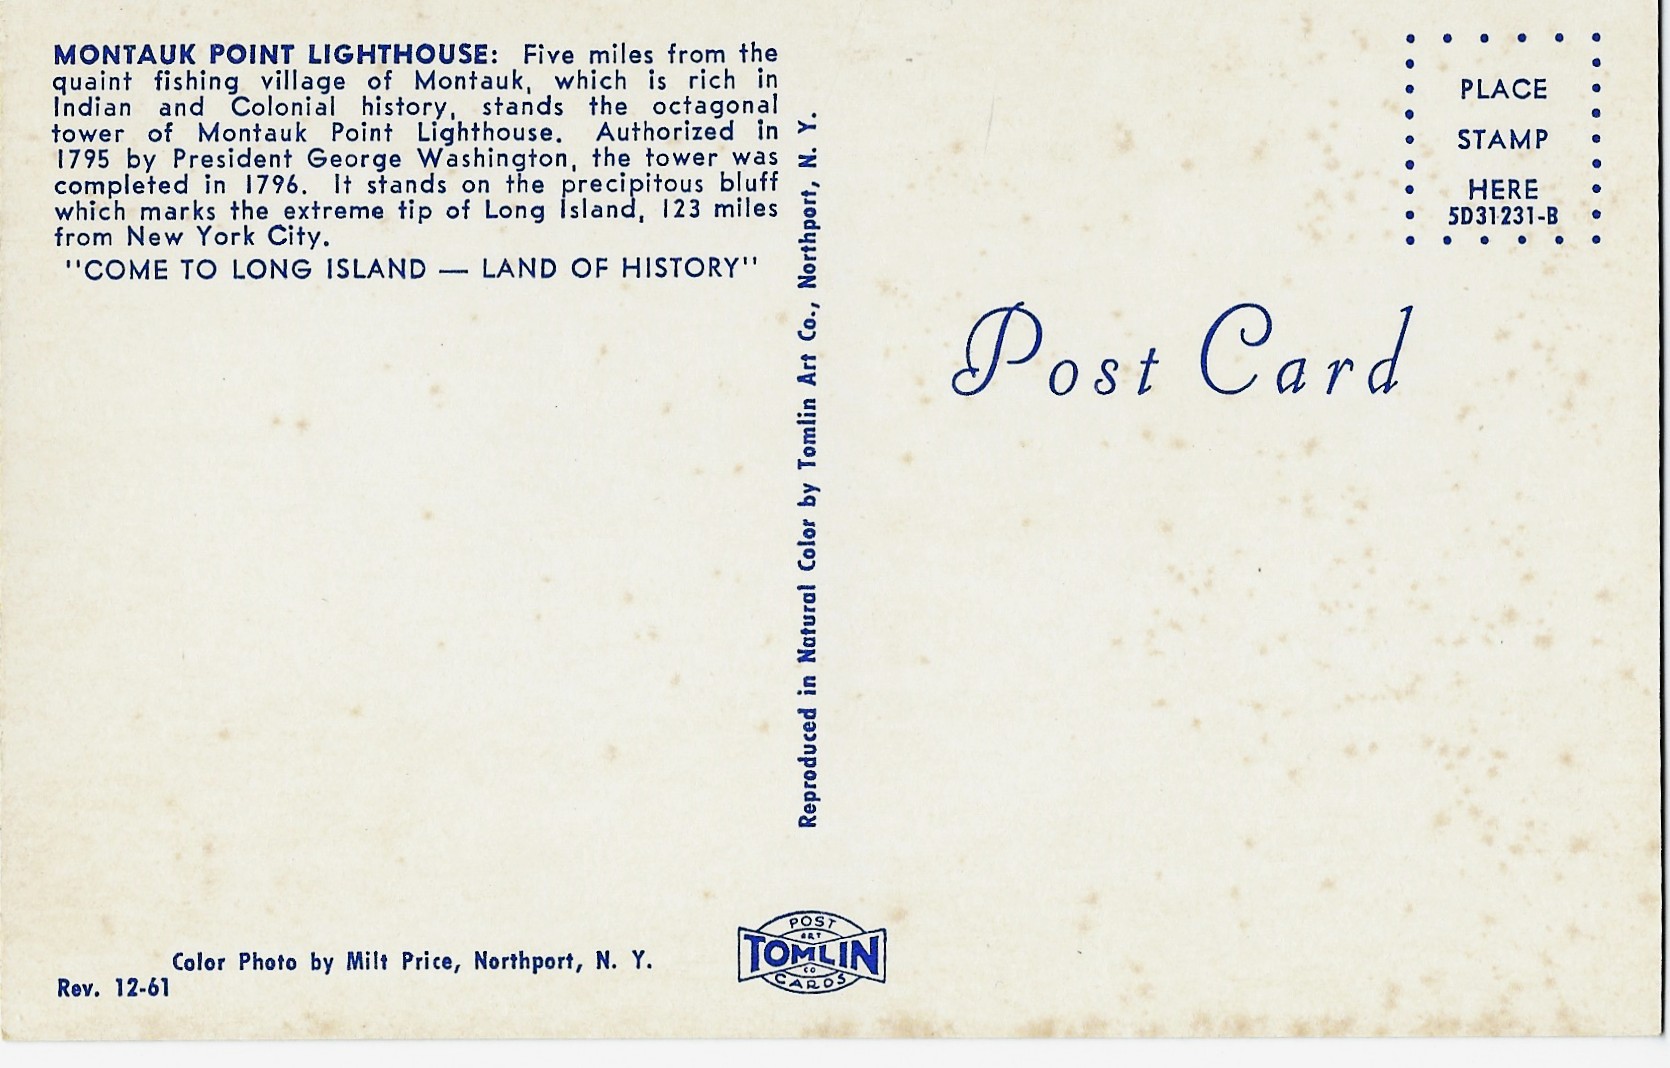 Montauk Point Lighthouse Postcard 5D31231-B (NY)